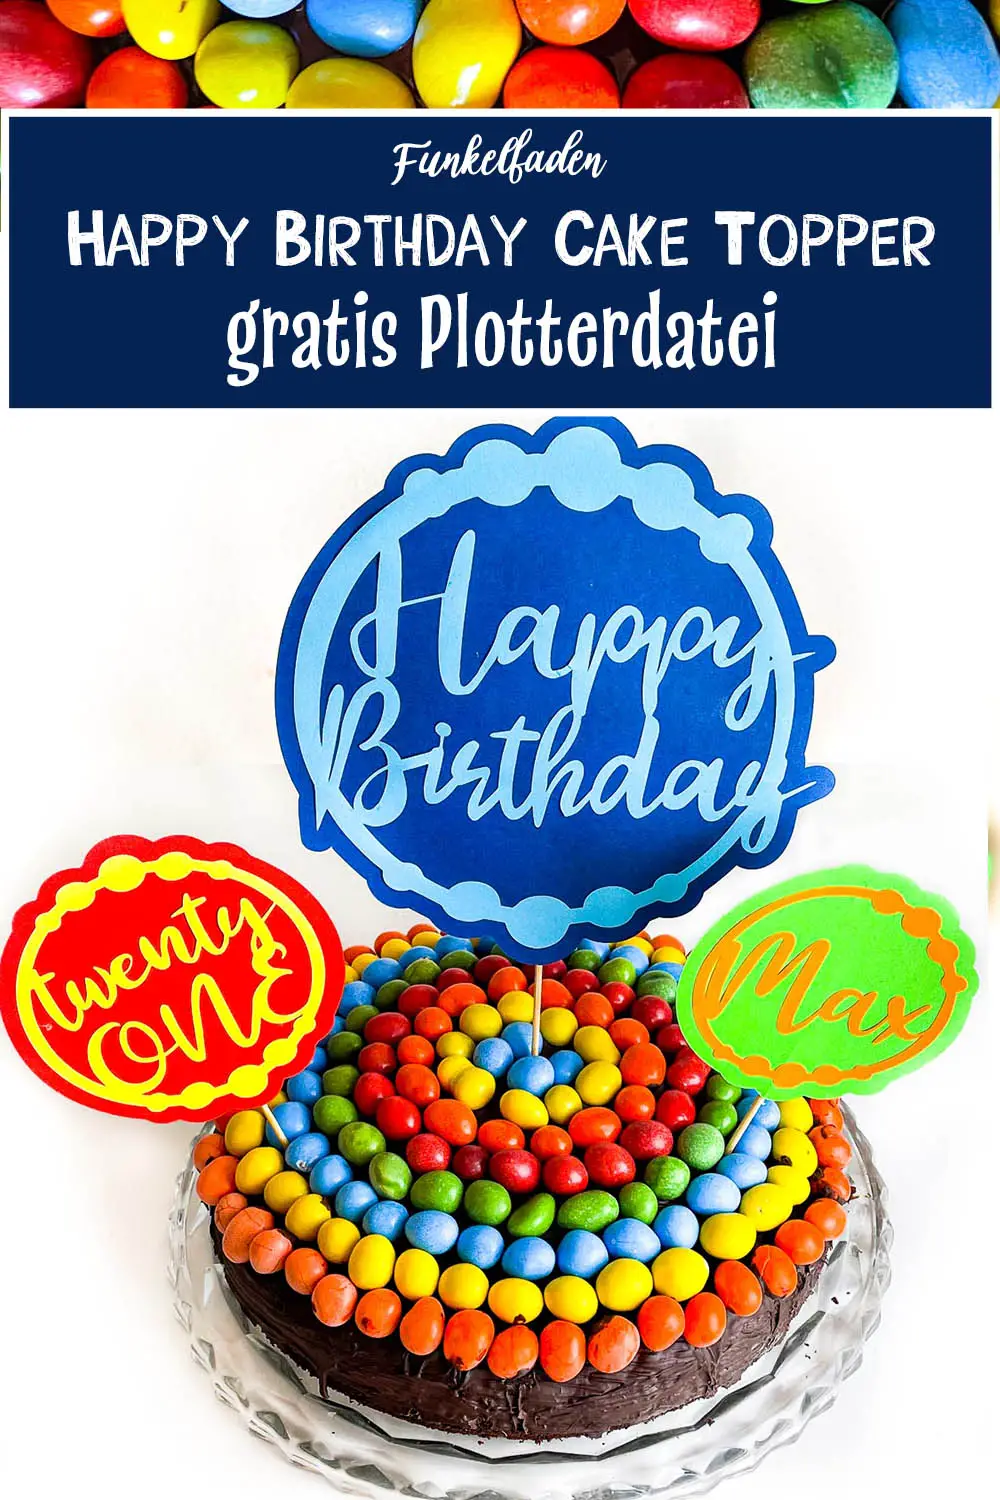 Happy Birthday Cake Topper gratis Plotterdatei